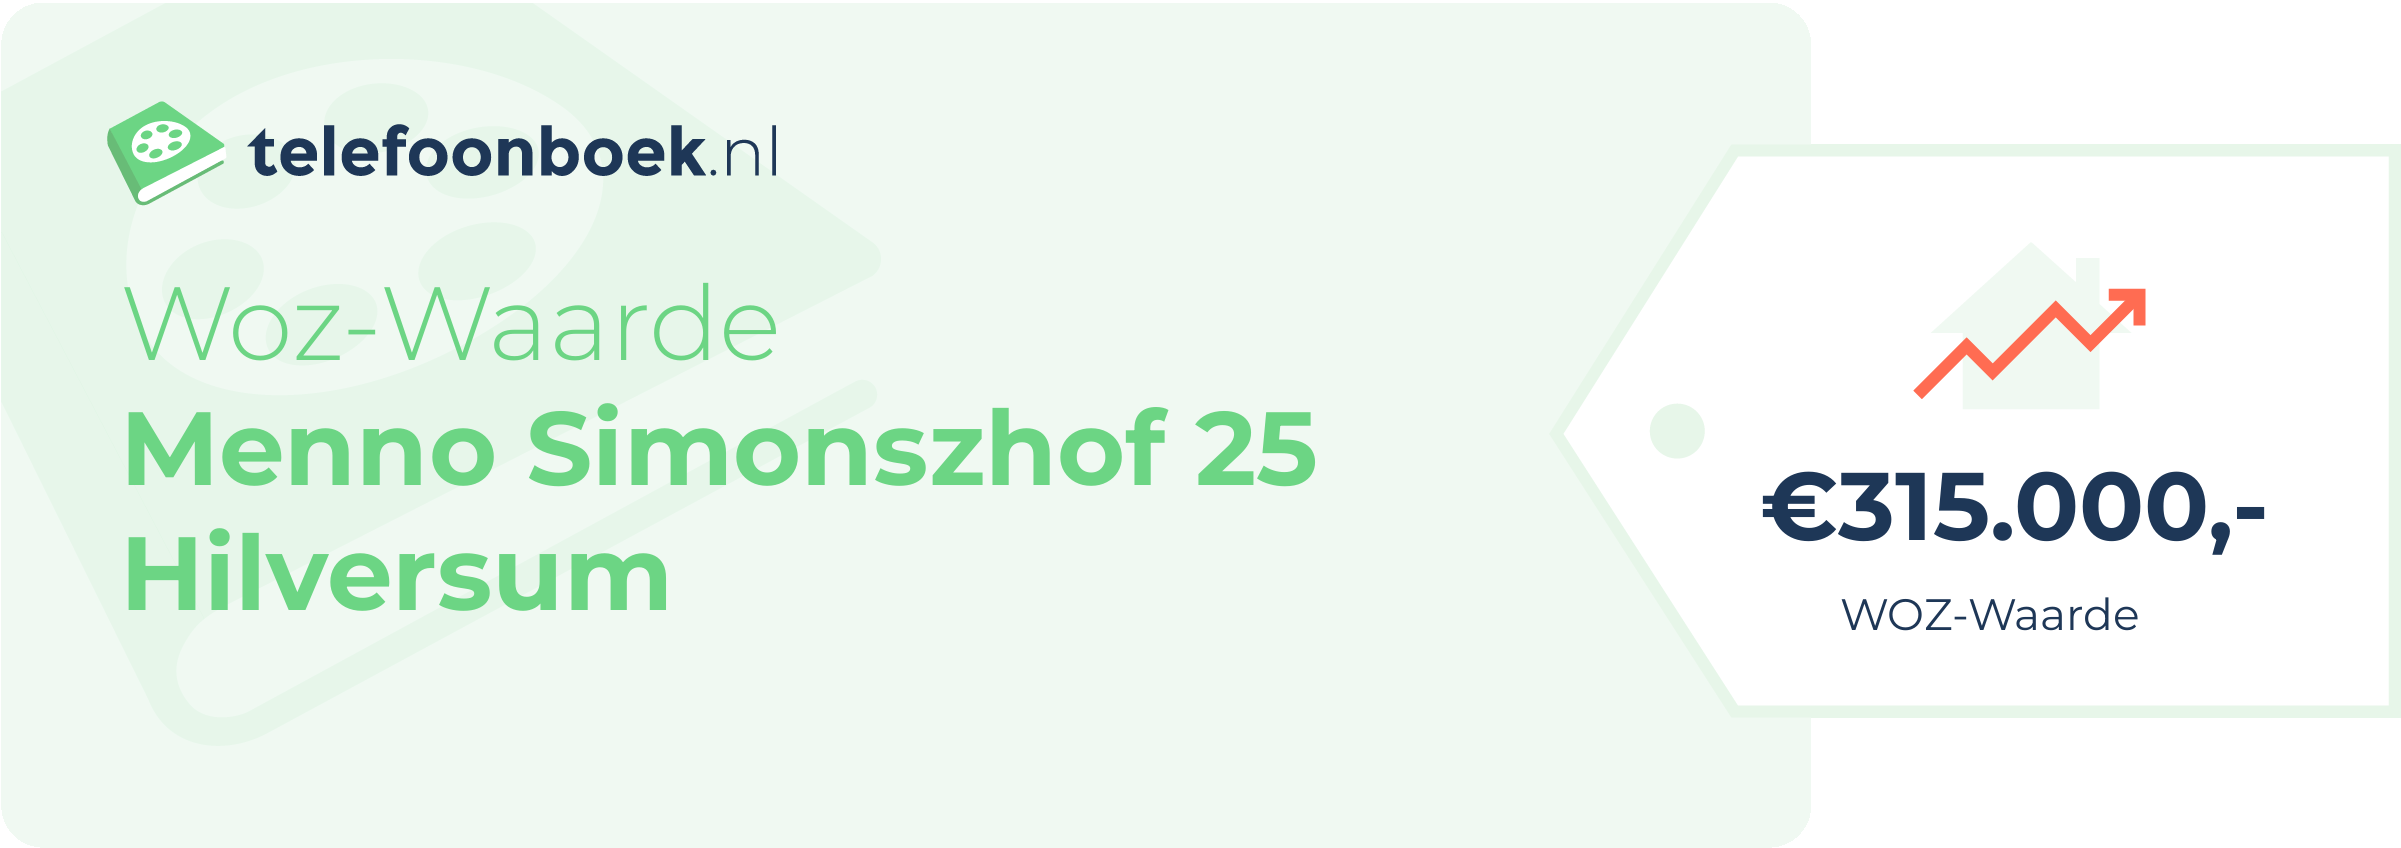 WOZ-waarde Menno Simonszhof 25 Hilversum